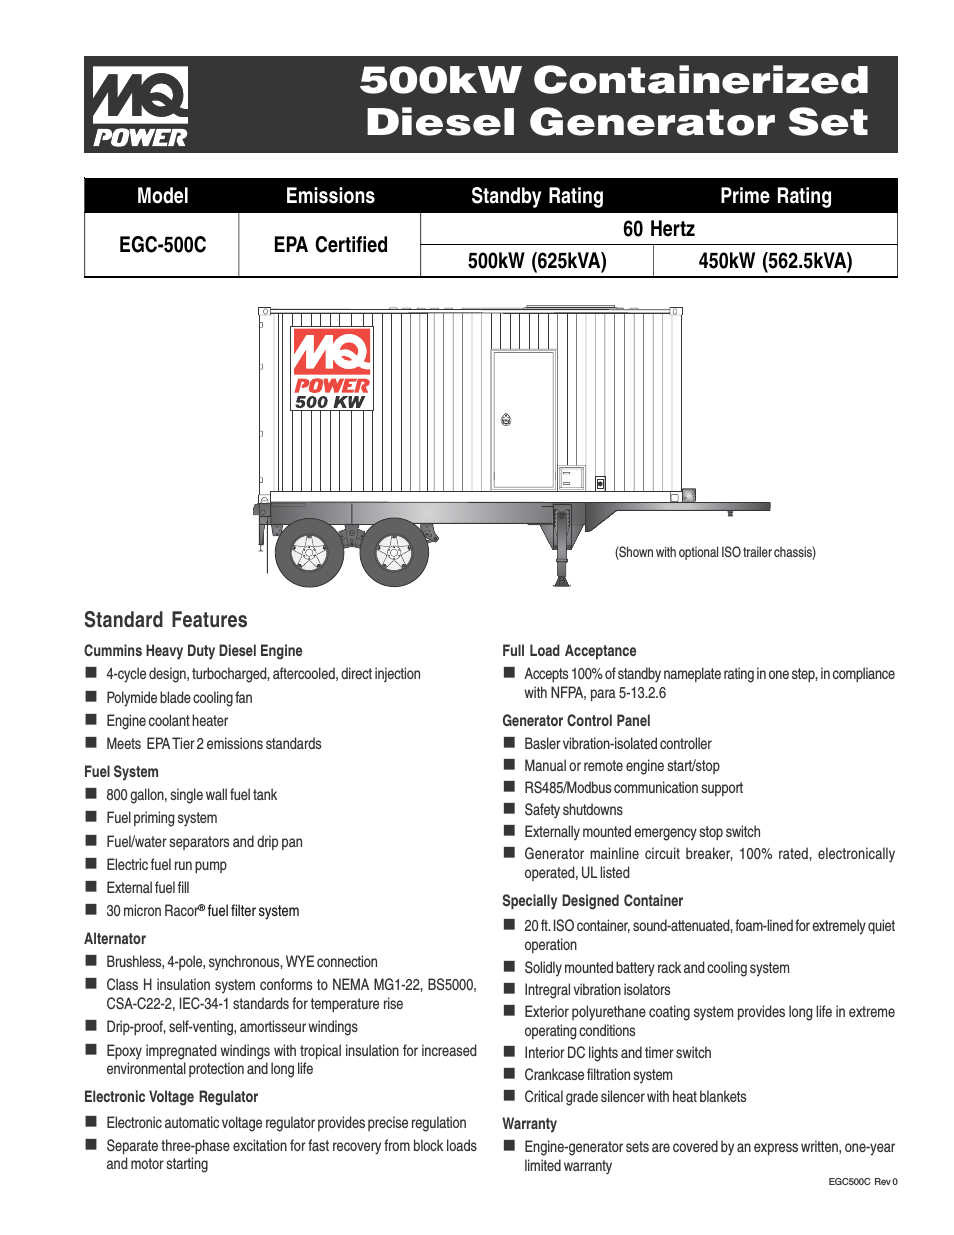 500kW Containerized Diesel Generator Set EGC-500C